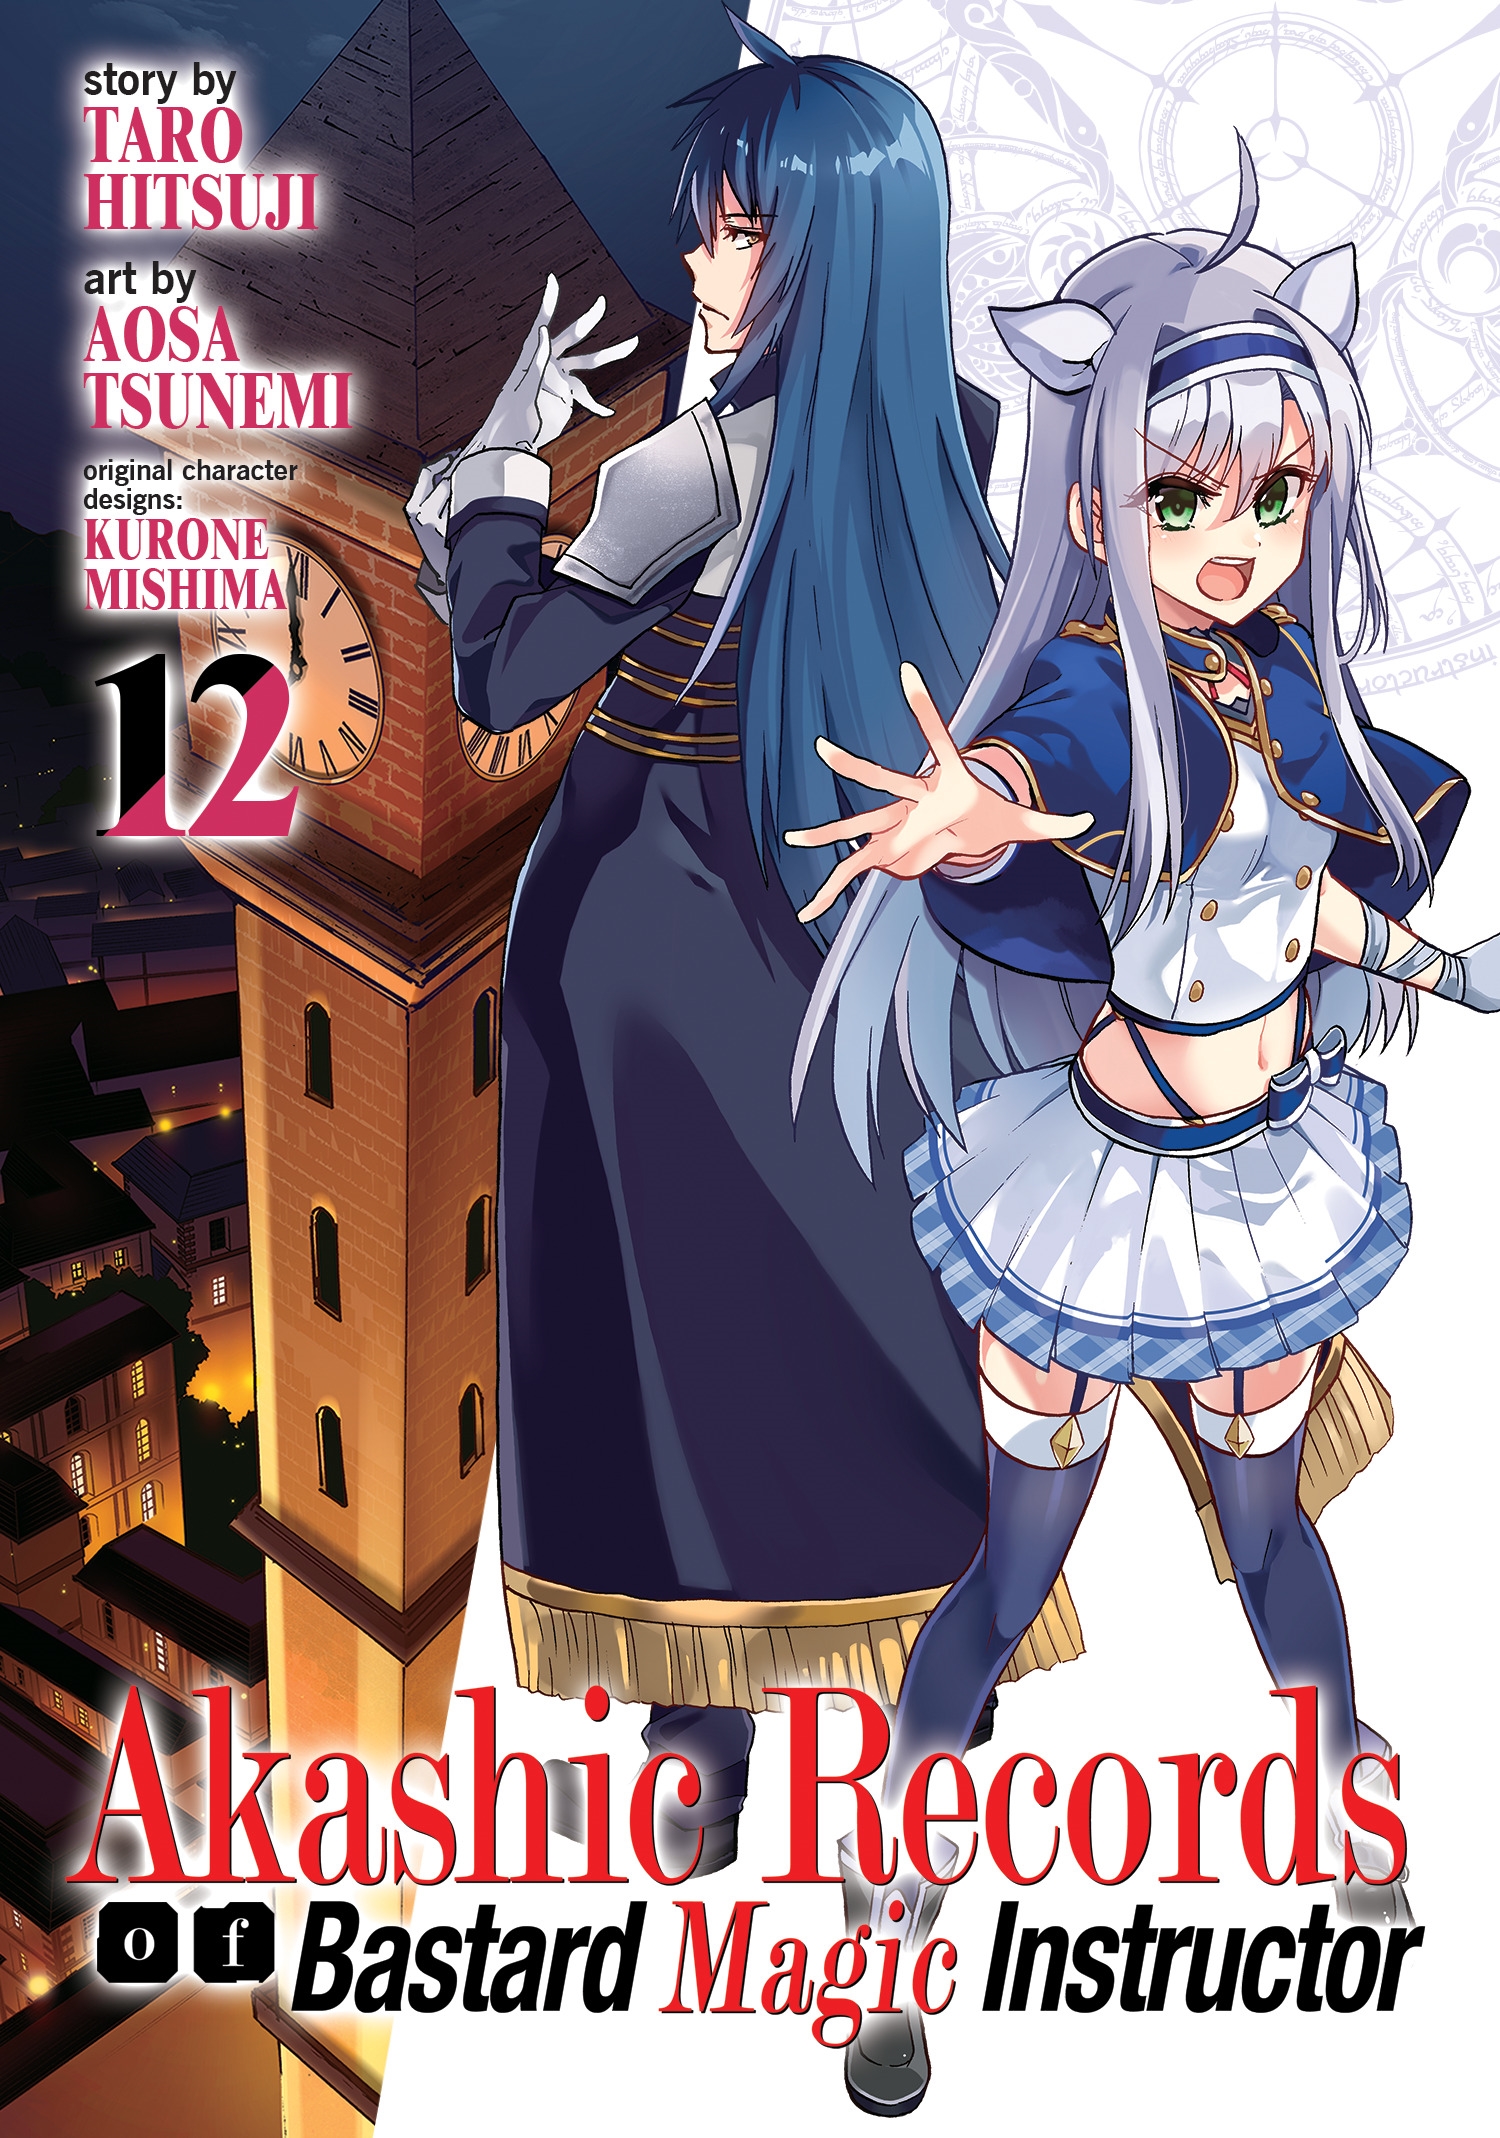 Akashic Records Of Bastard Magic Instructor Vol 12 By Taro Hitsuji Penguin Books Australia 8625